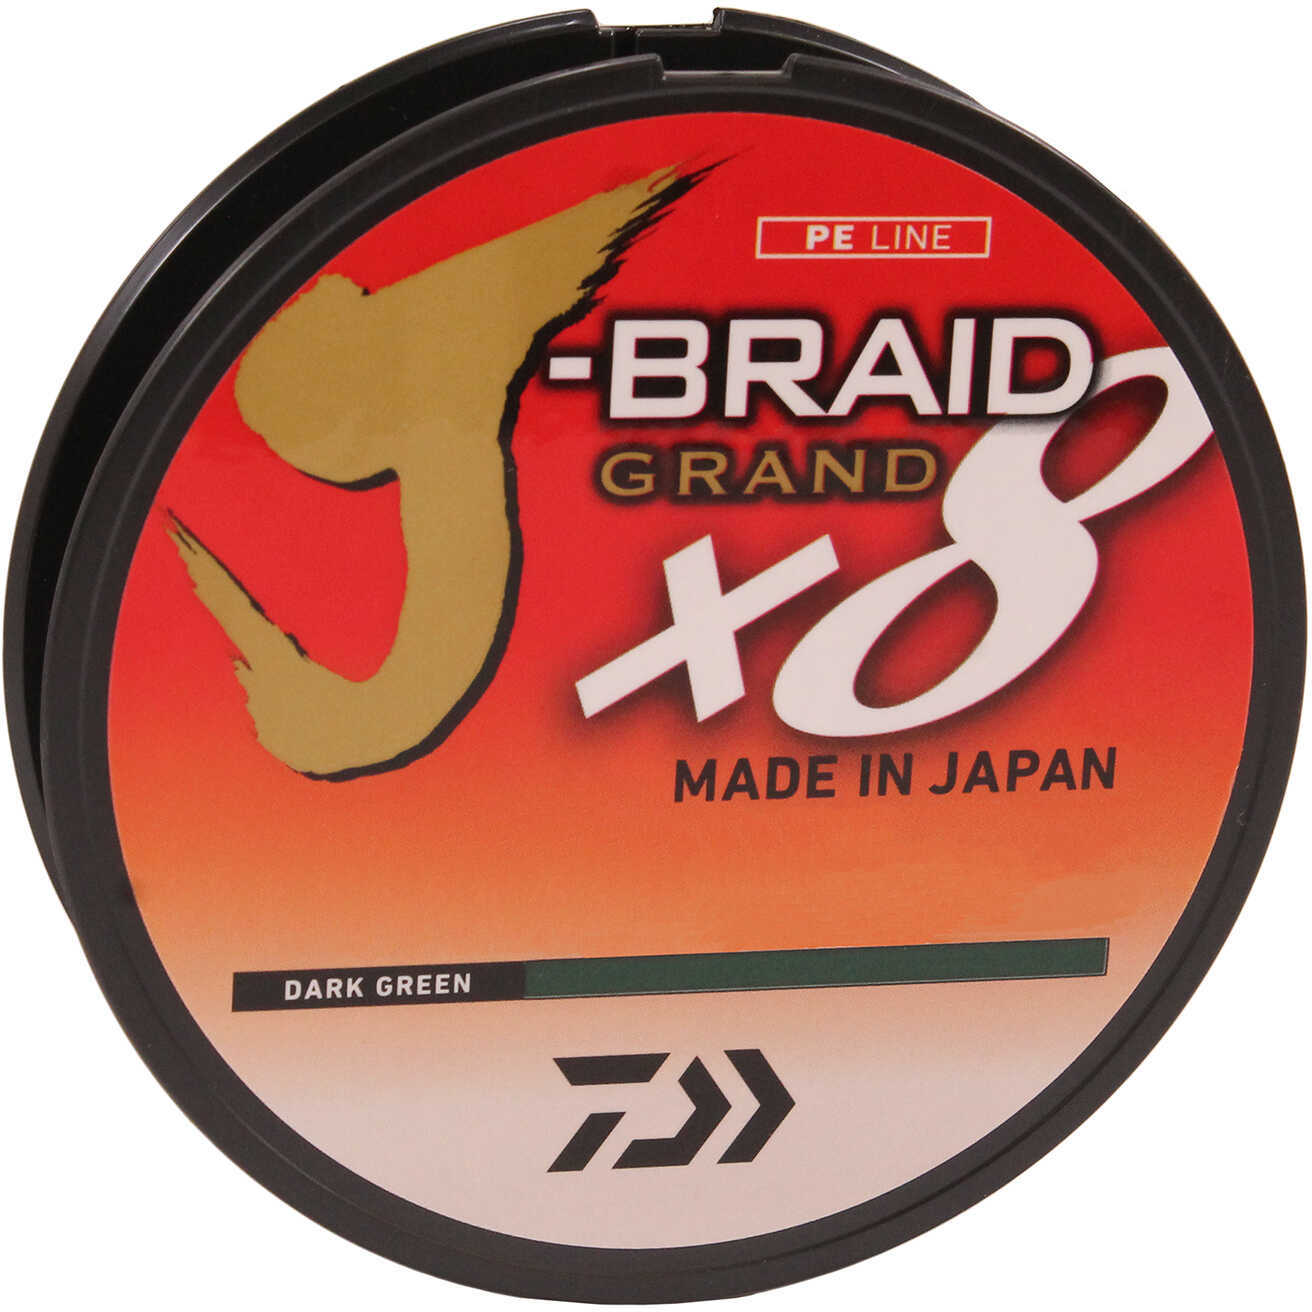 Daiwa J-Braid x8 Grand Braided Line 300 Yards , 40 lbs Tested, .013" Diameter, Dark Green